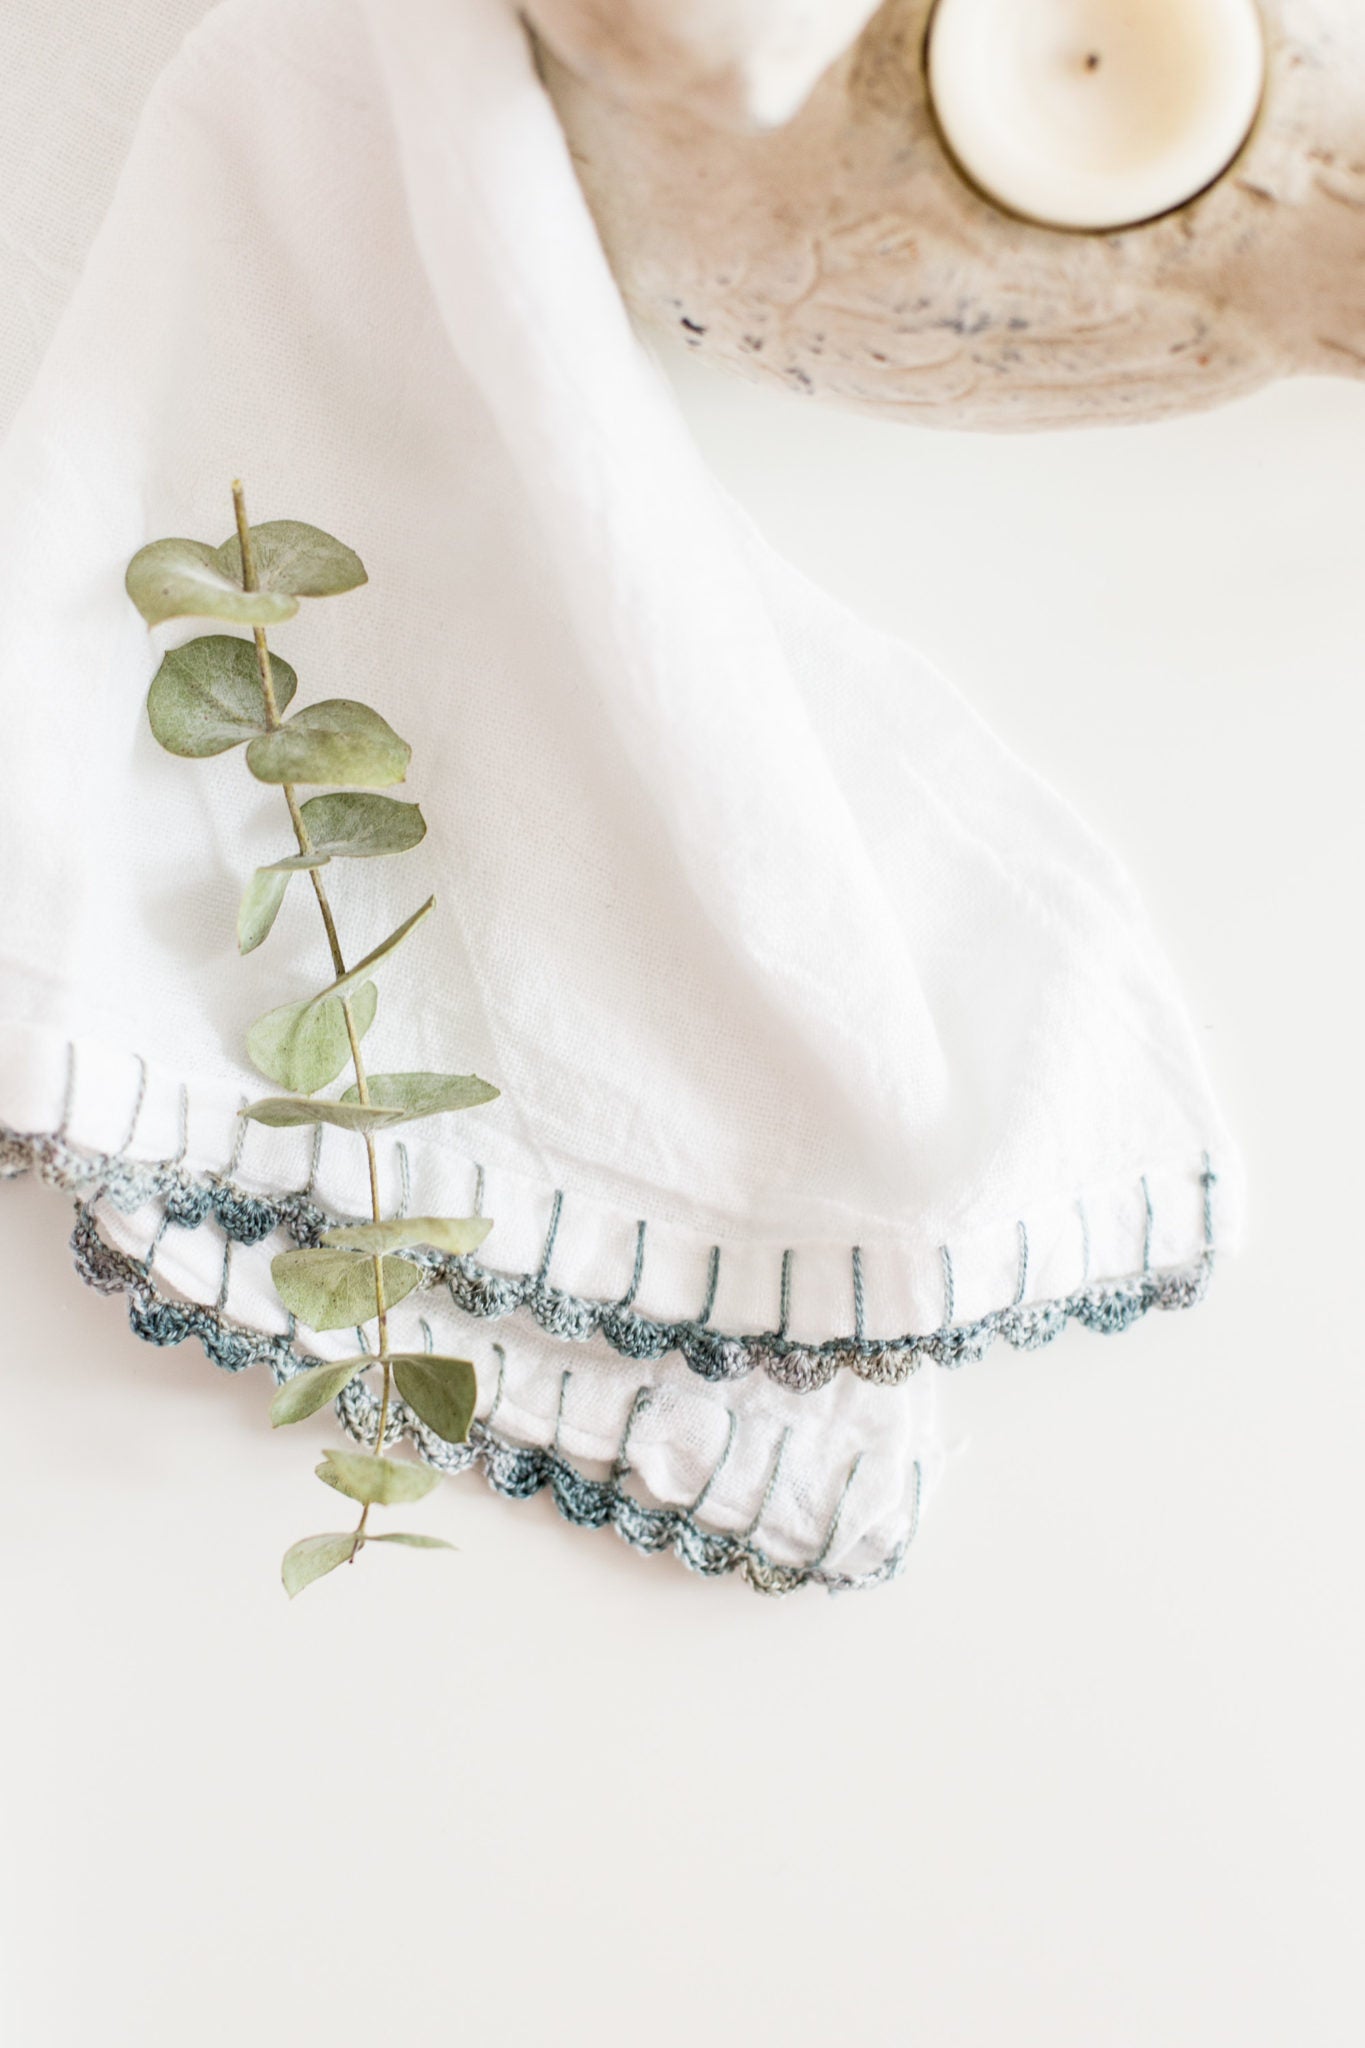 Easy to Follow Crochet Edged Dish Towel Tutorial